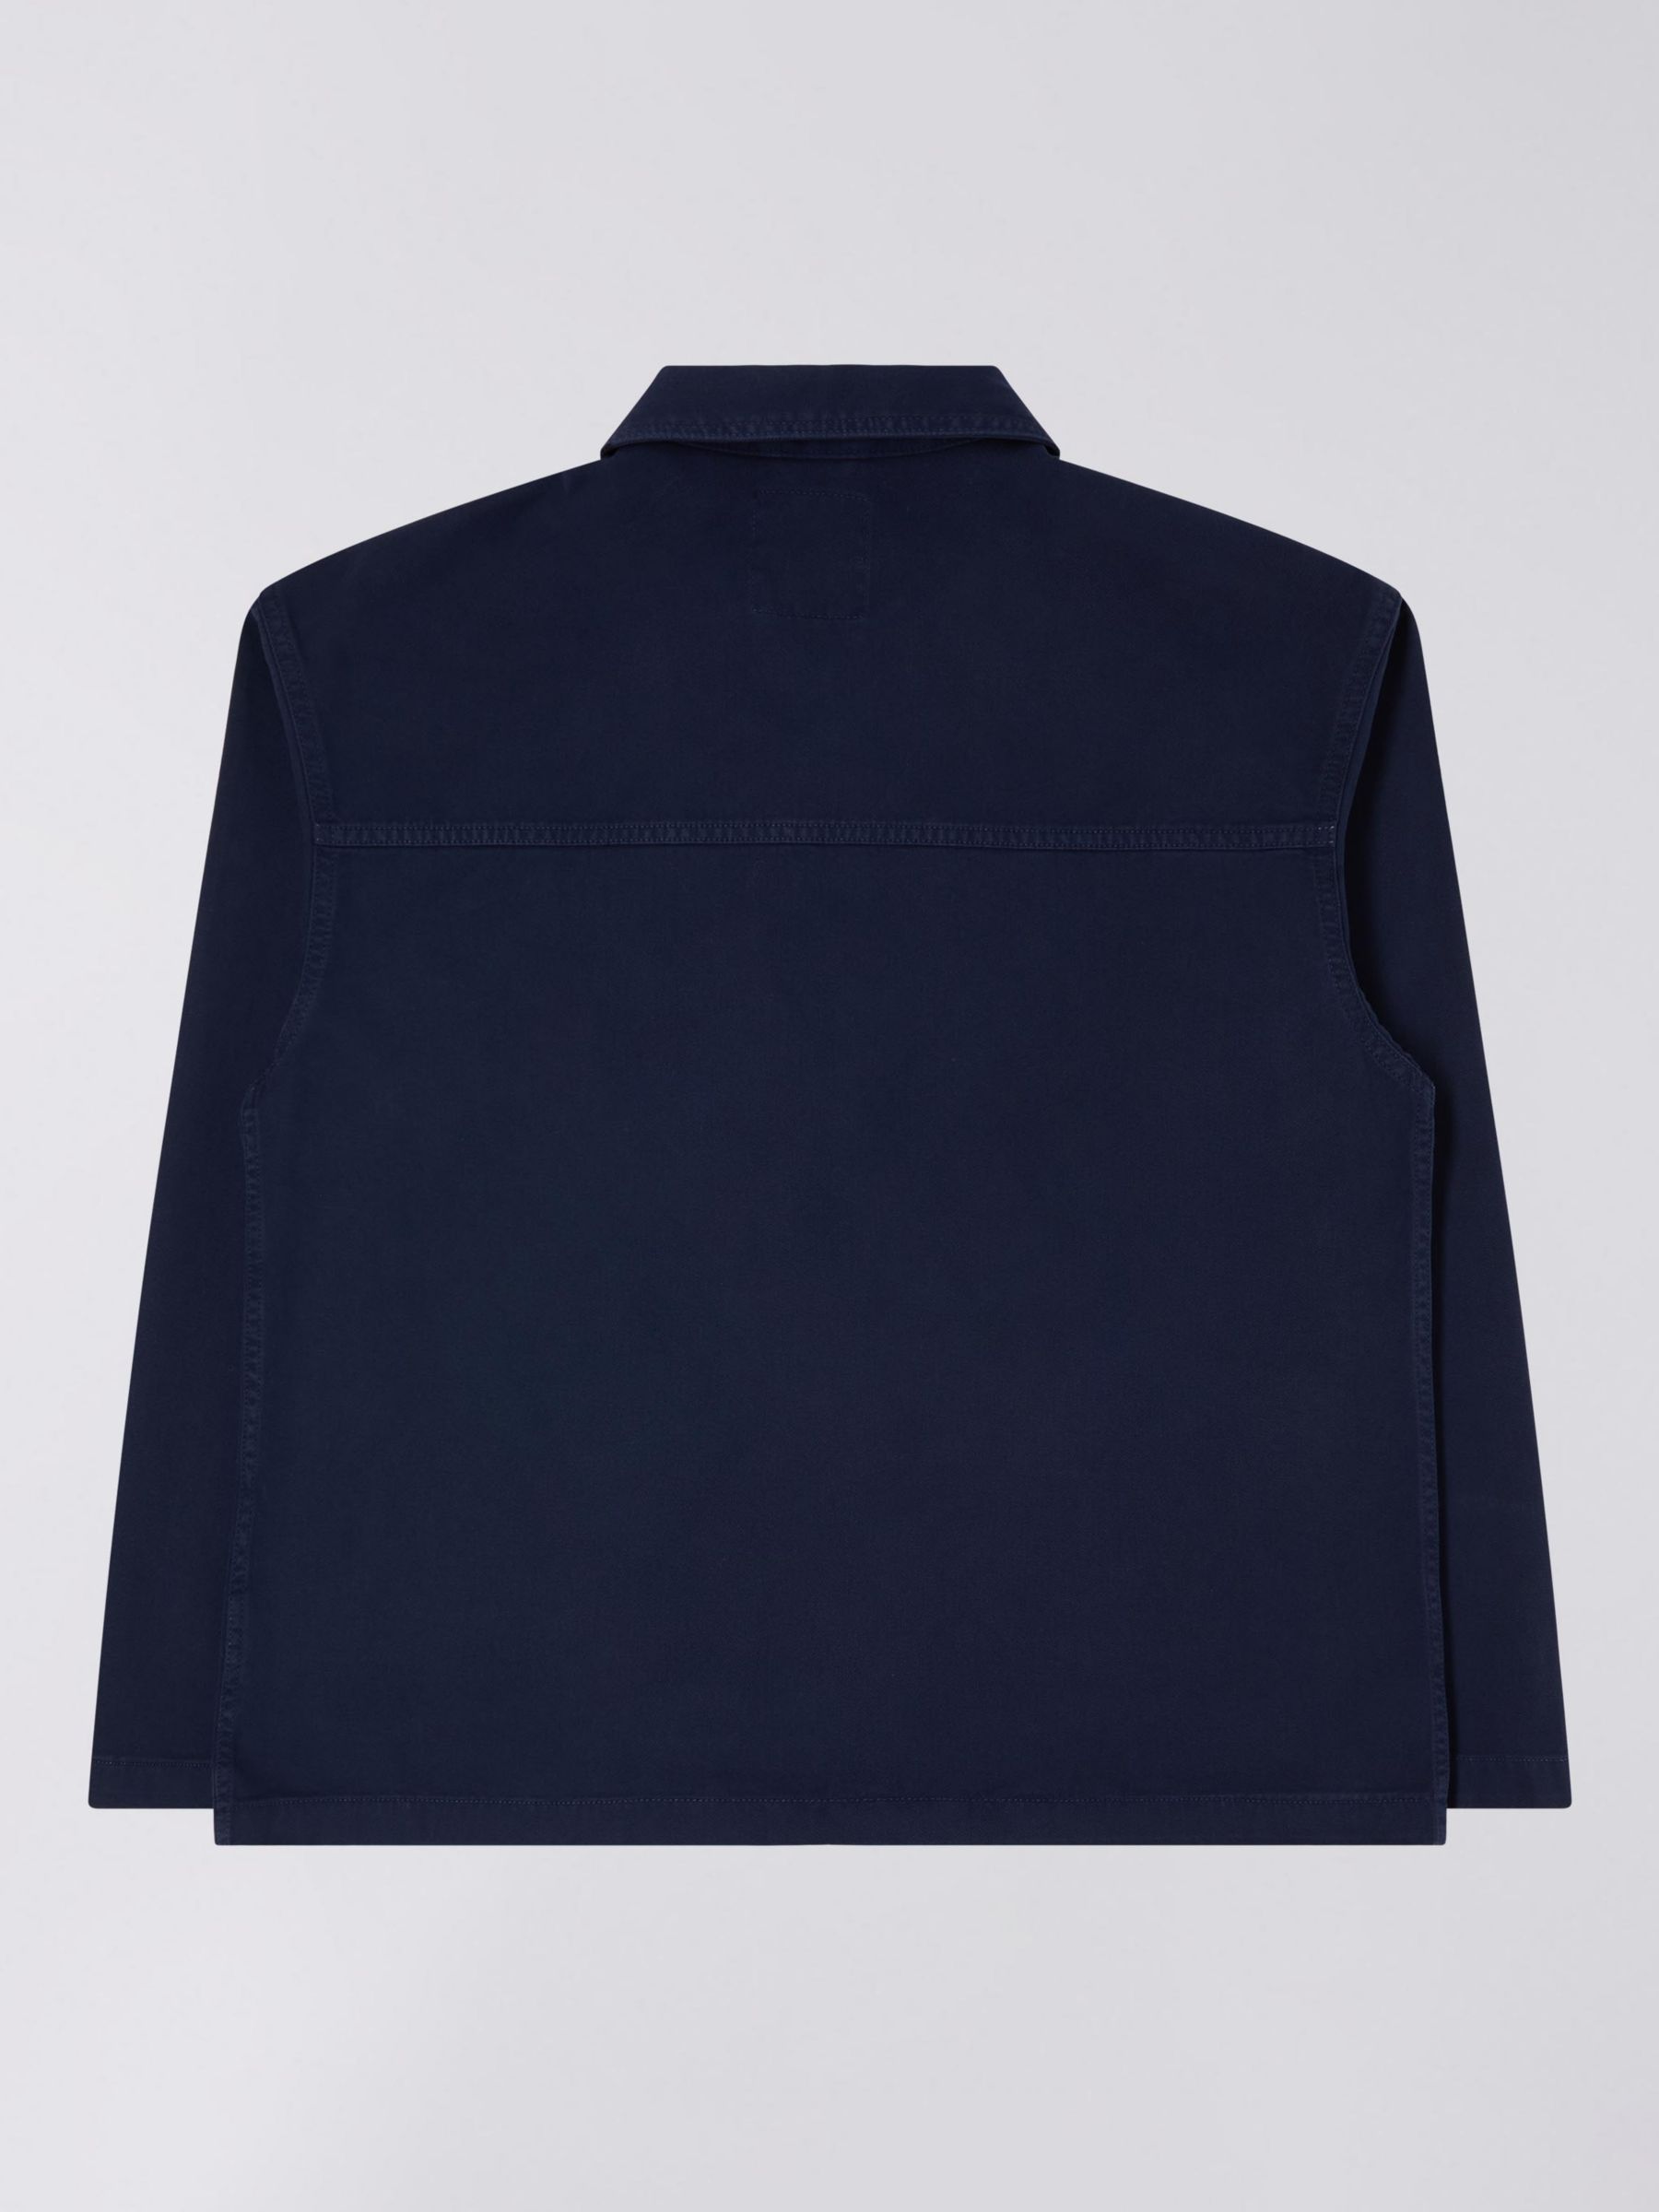 Edwin TrembleyOrganic Cotton Button Down Jacket, Maritime Blue, M